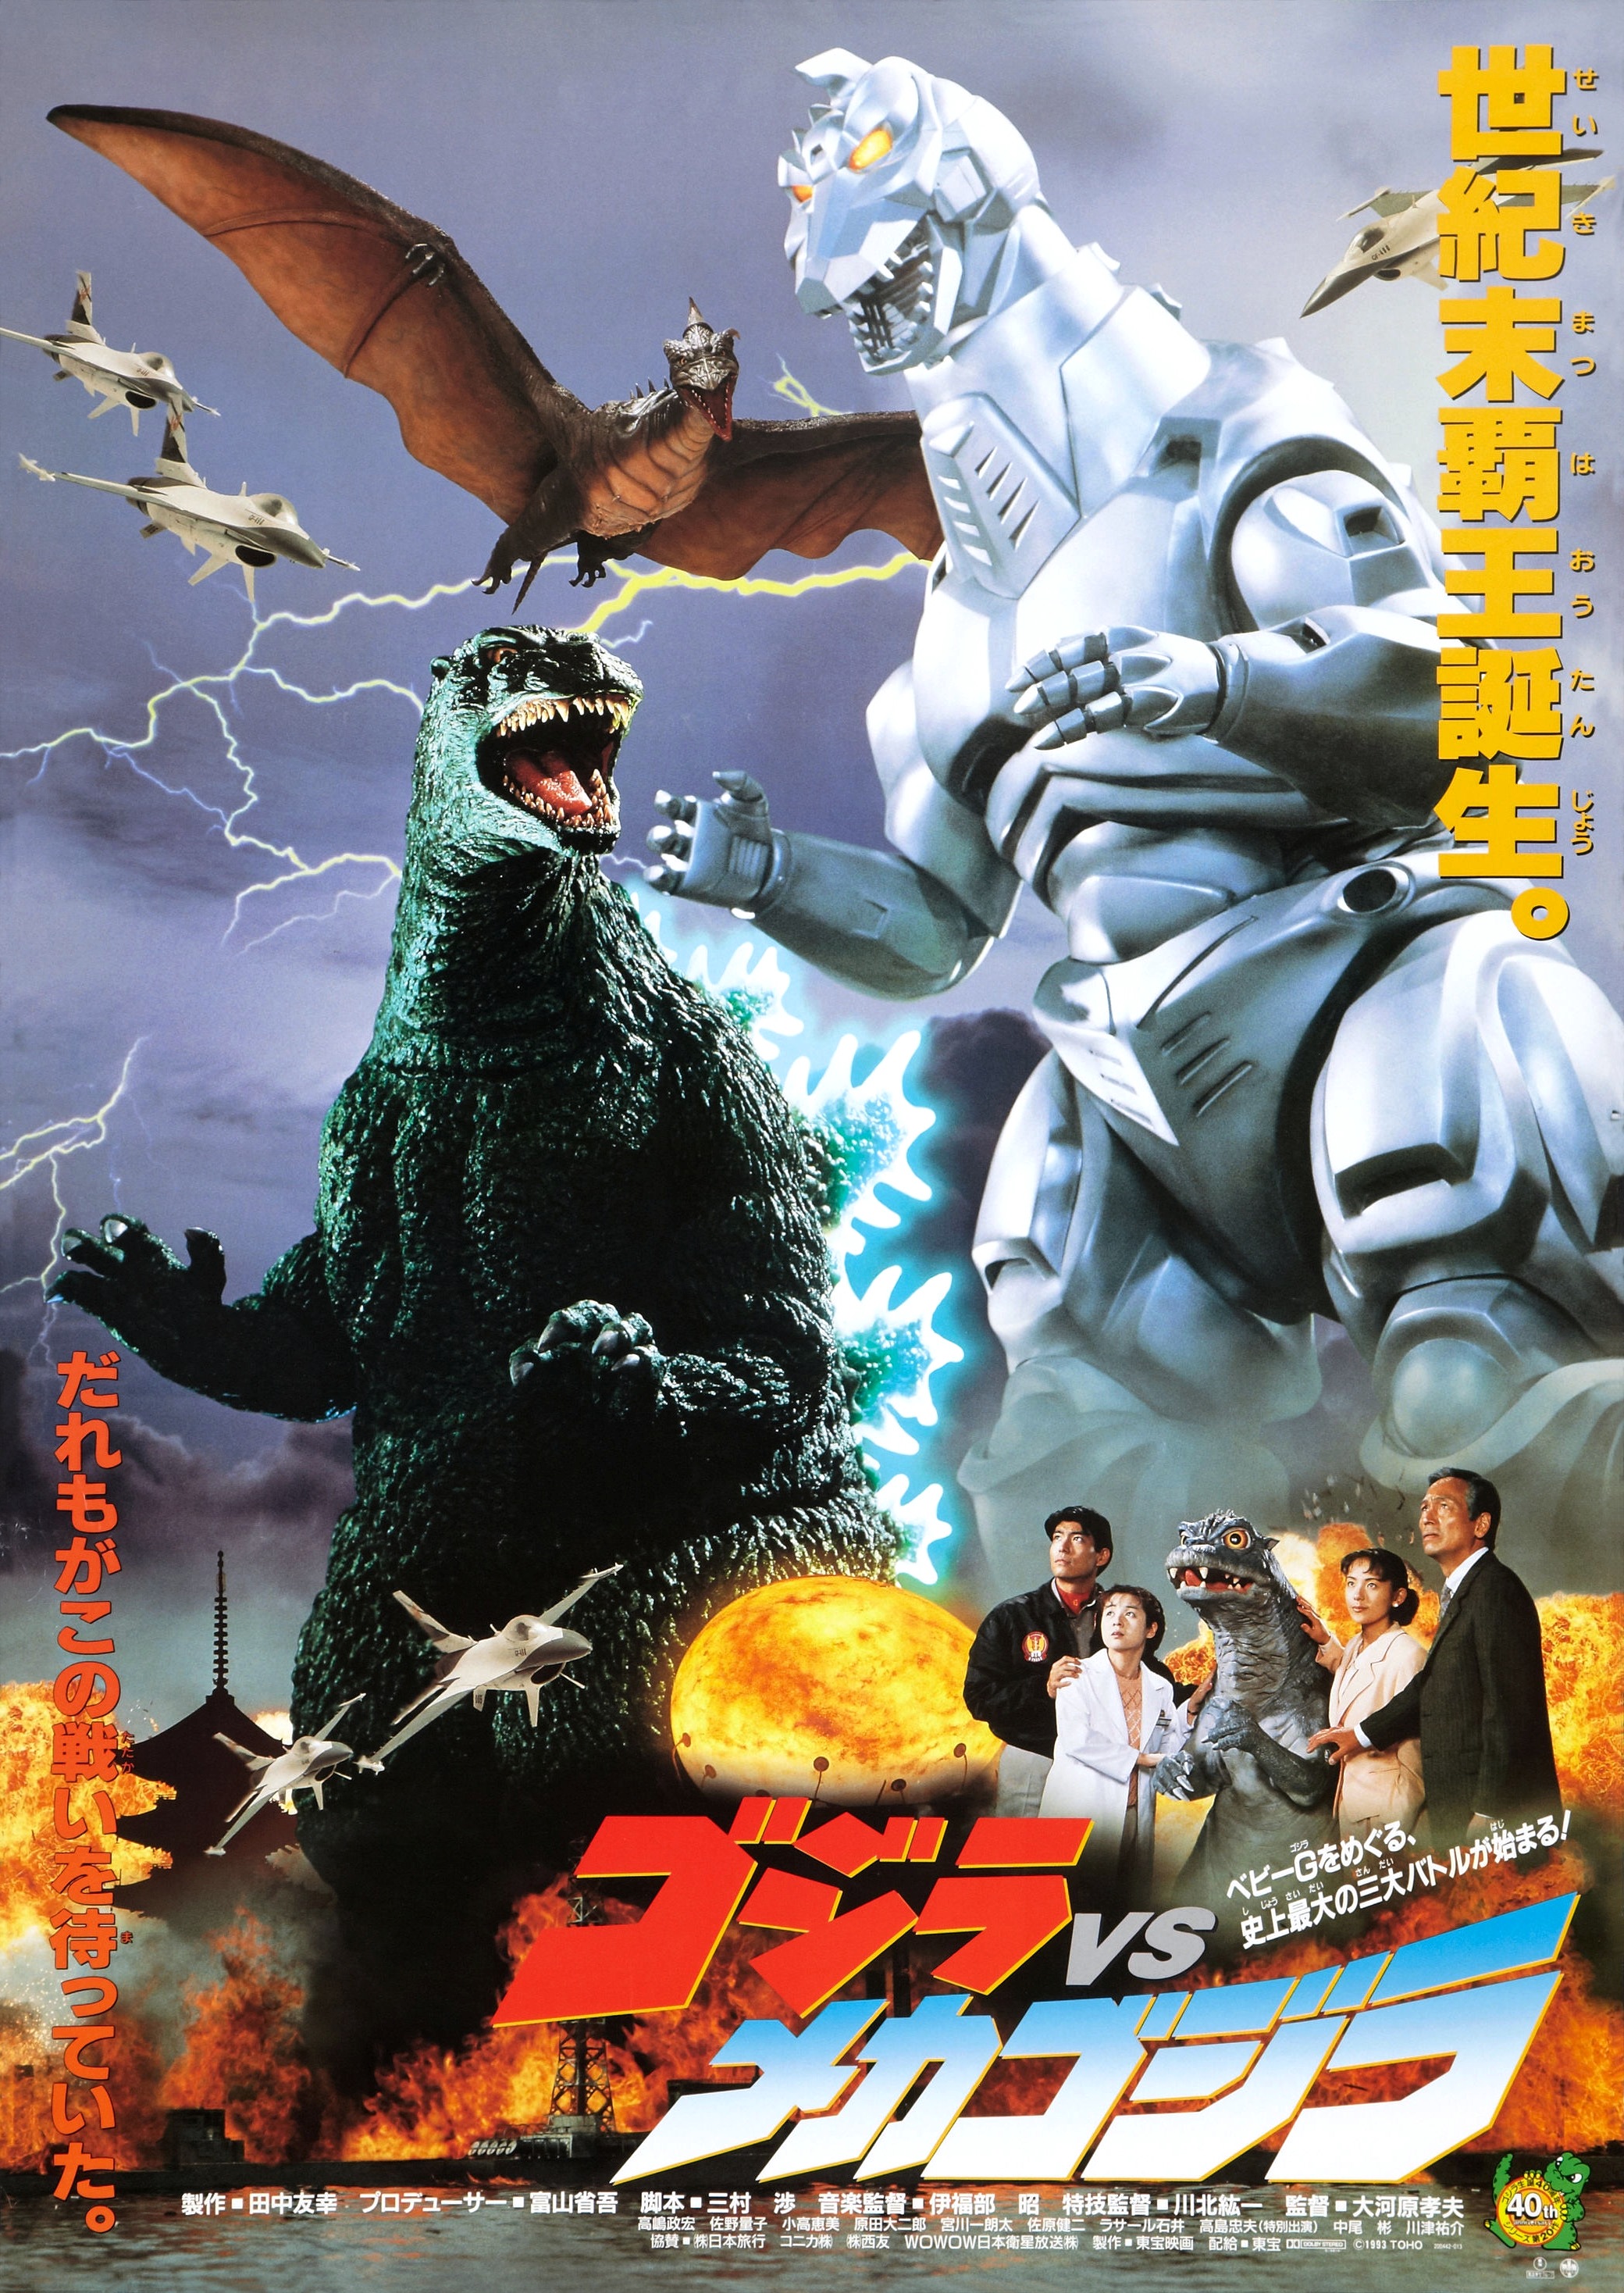 Godzilla Vs. Mechagodzilla #4